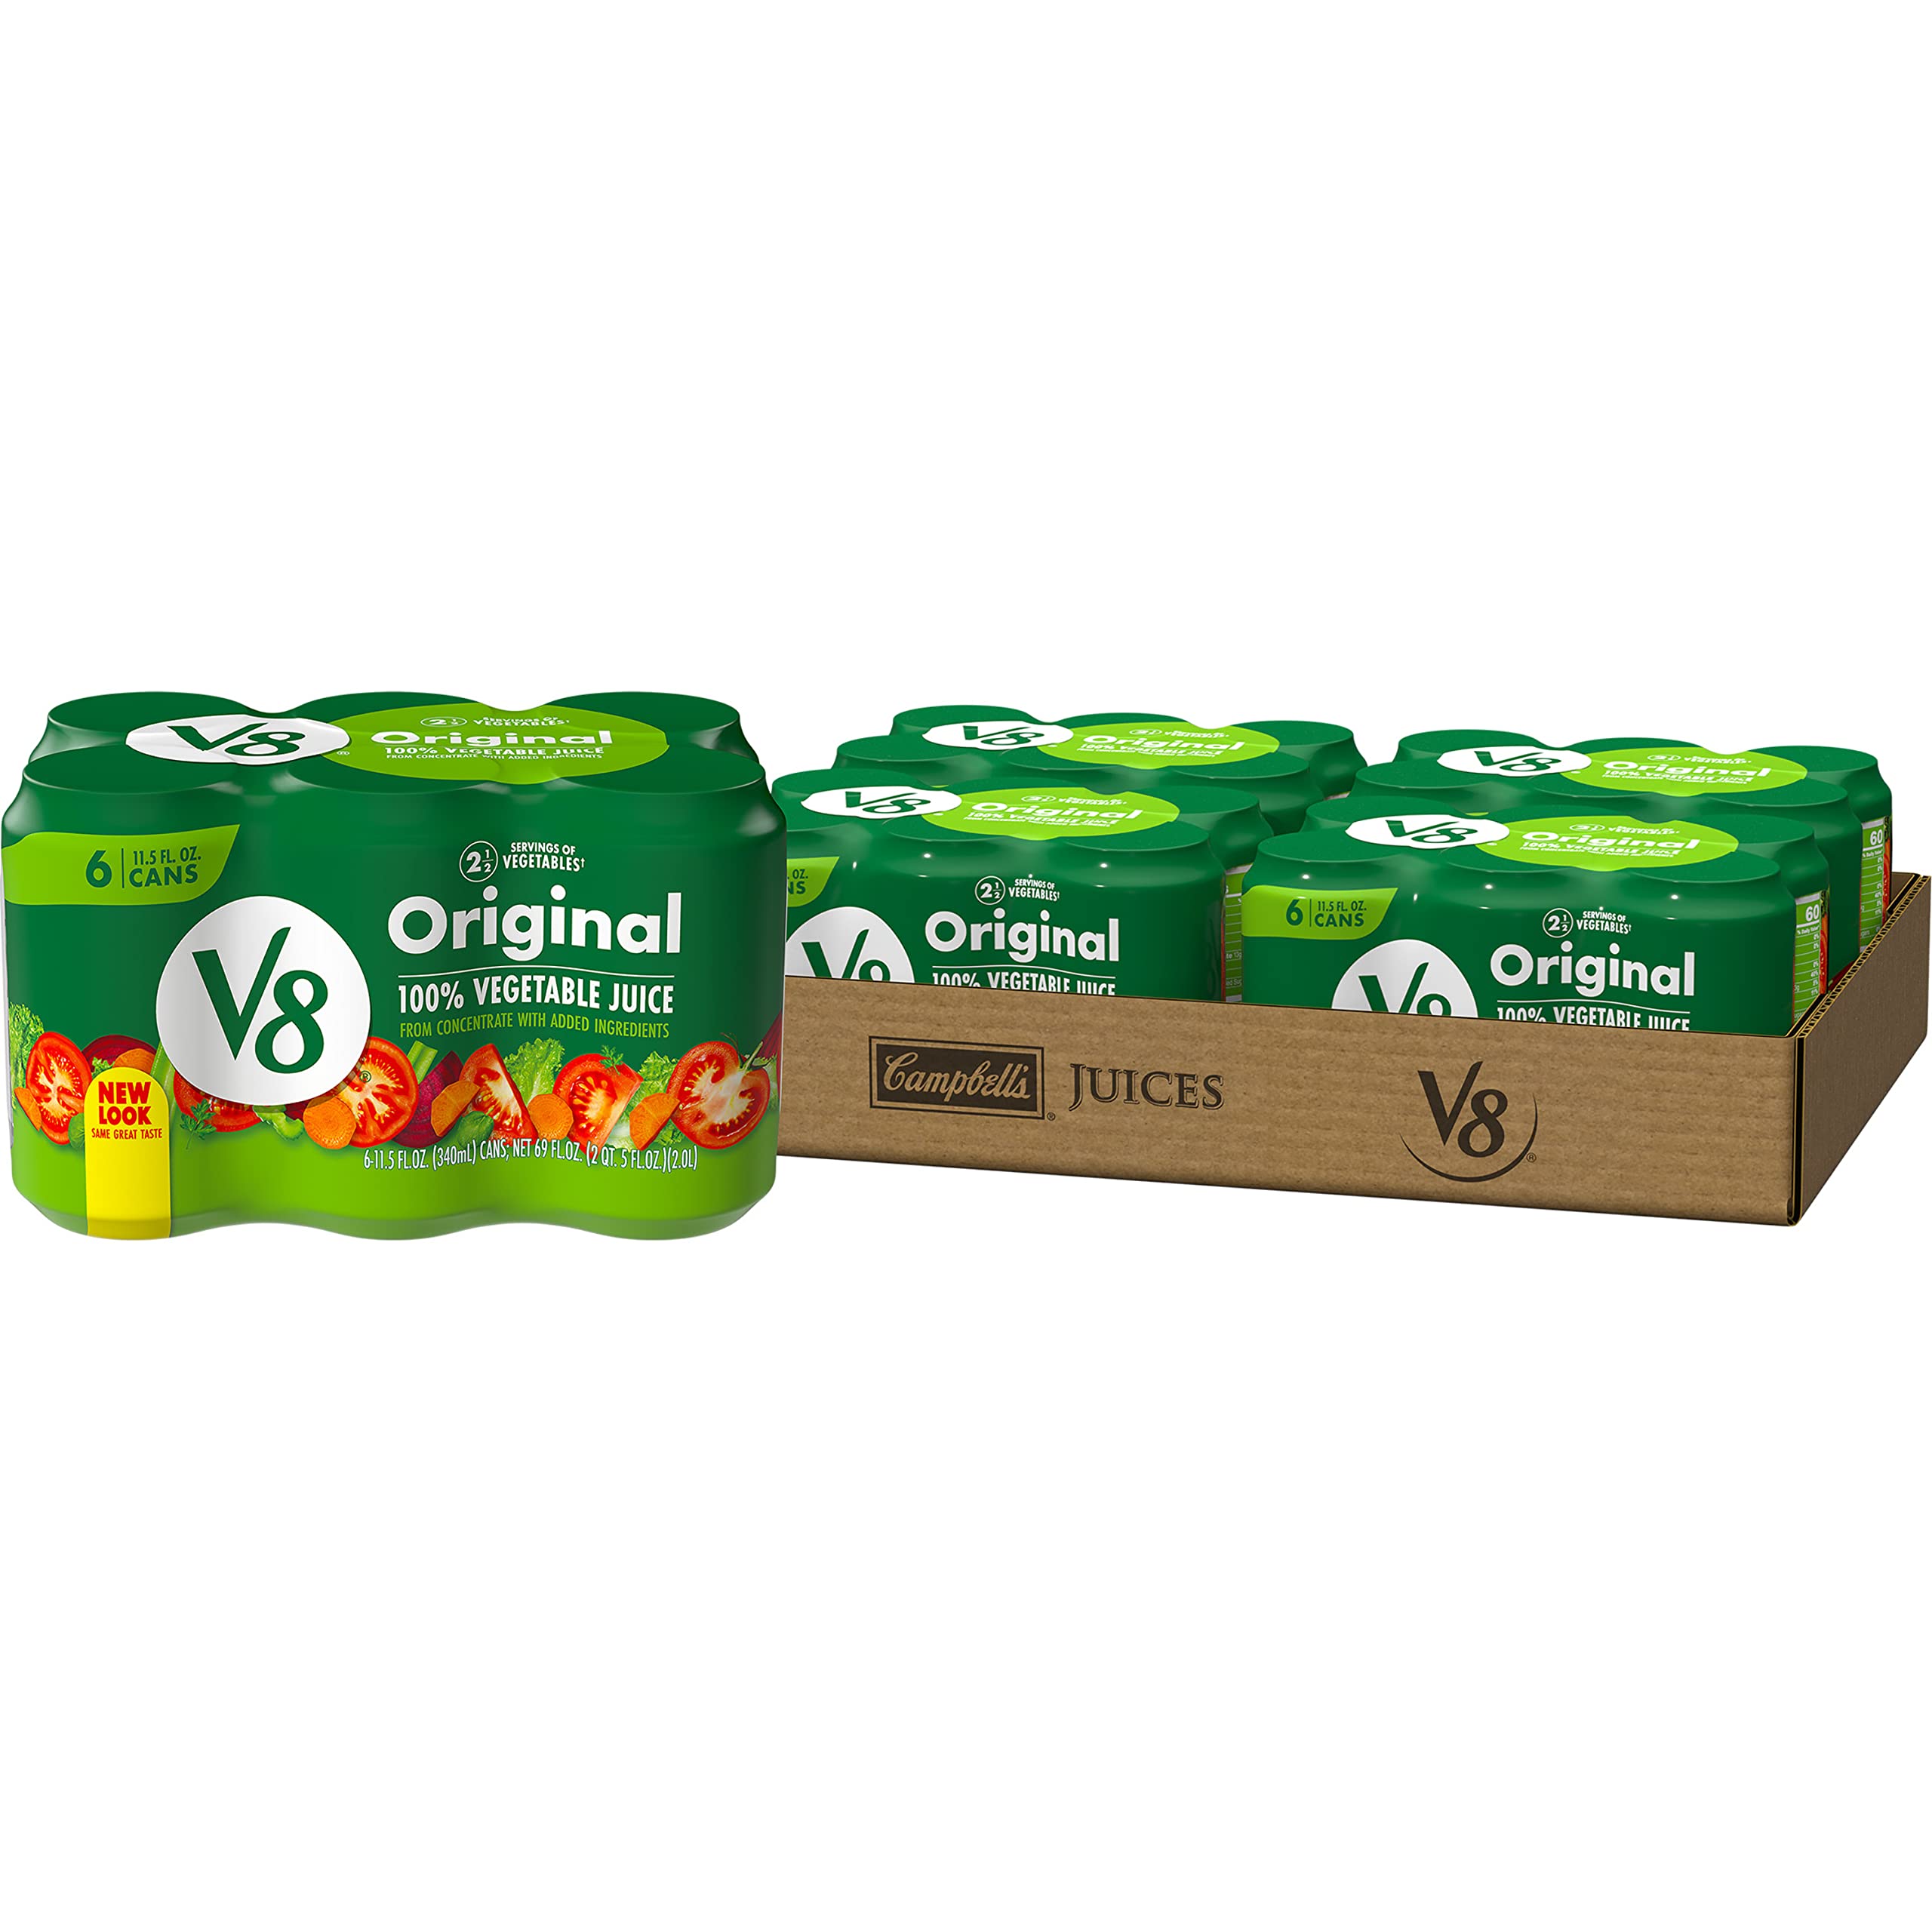 24-Pack 11.5-Oz V8 100% Vegetable Juice Cans (Original) $10.85 + Free Shipping w/ Prime or on $25+